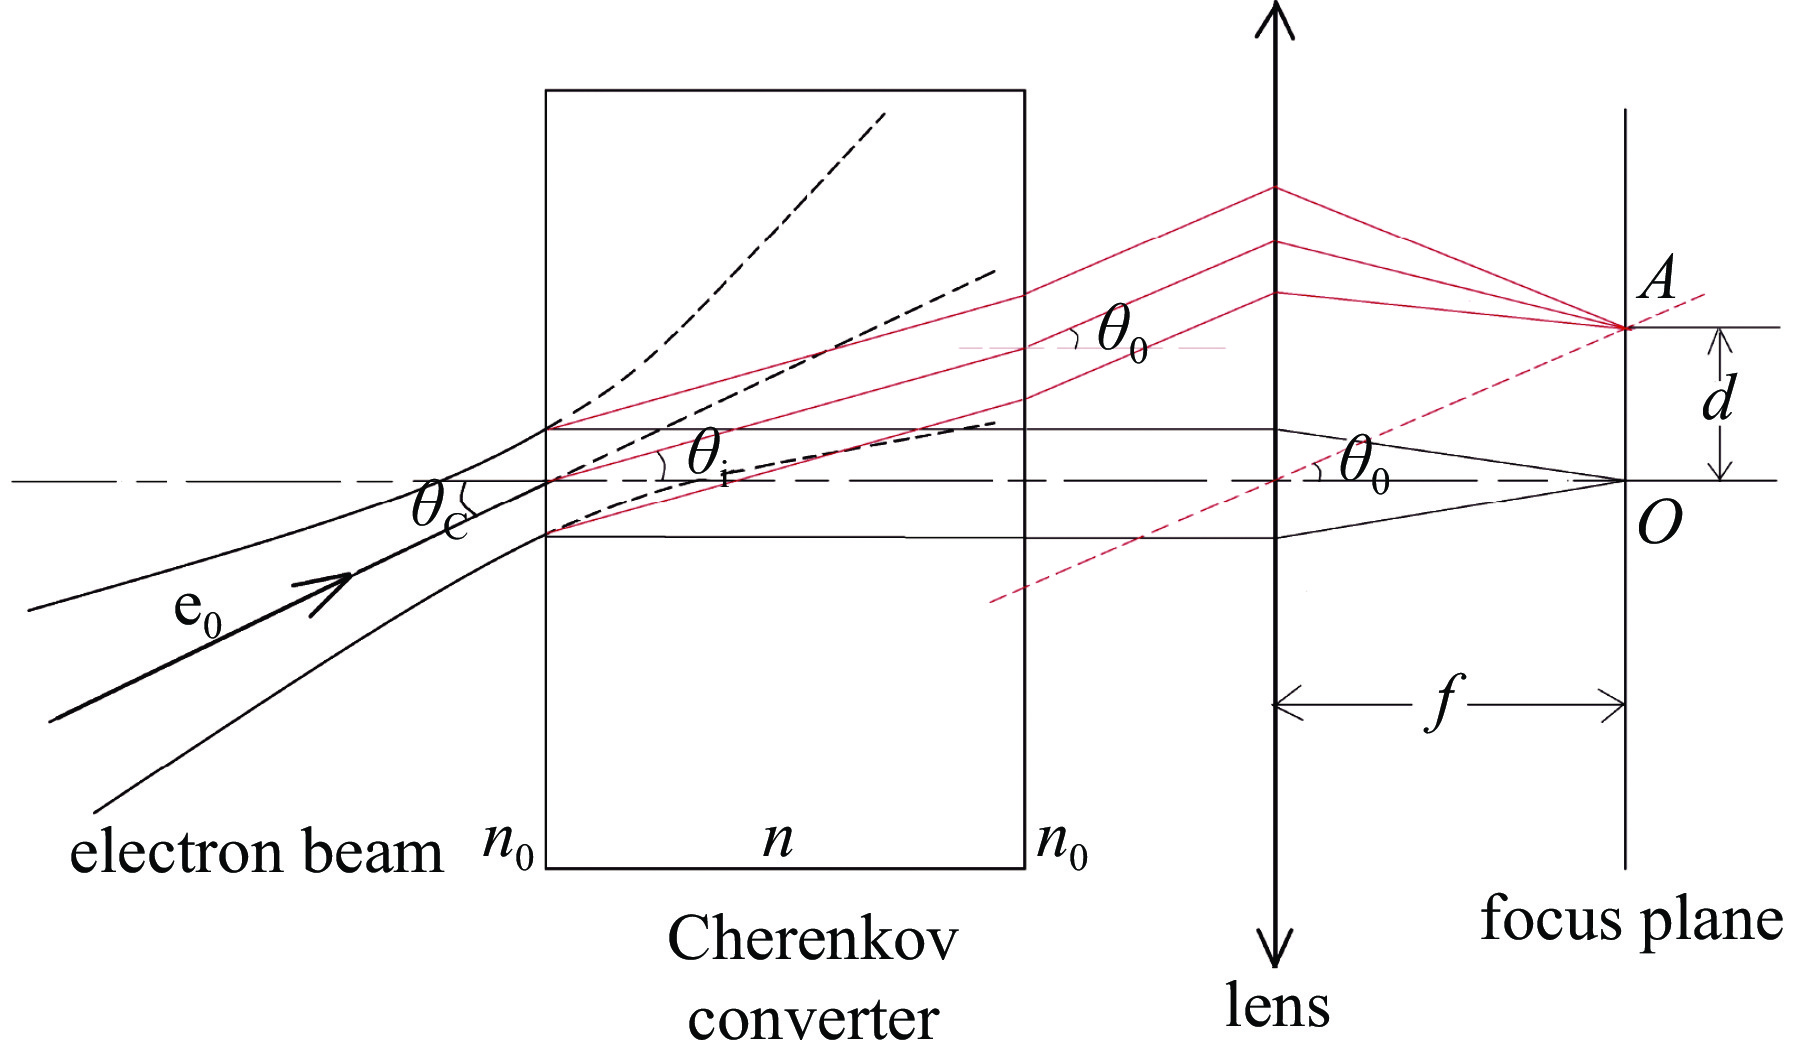 Beam divergence measurement principle based on focus plane imaging method